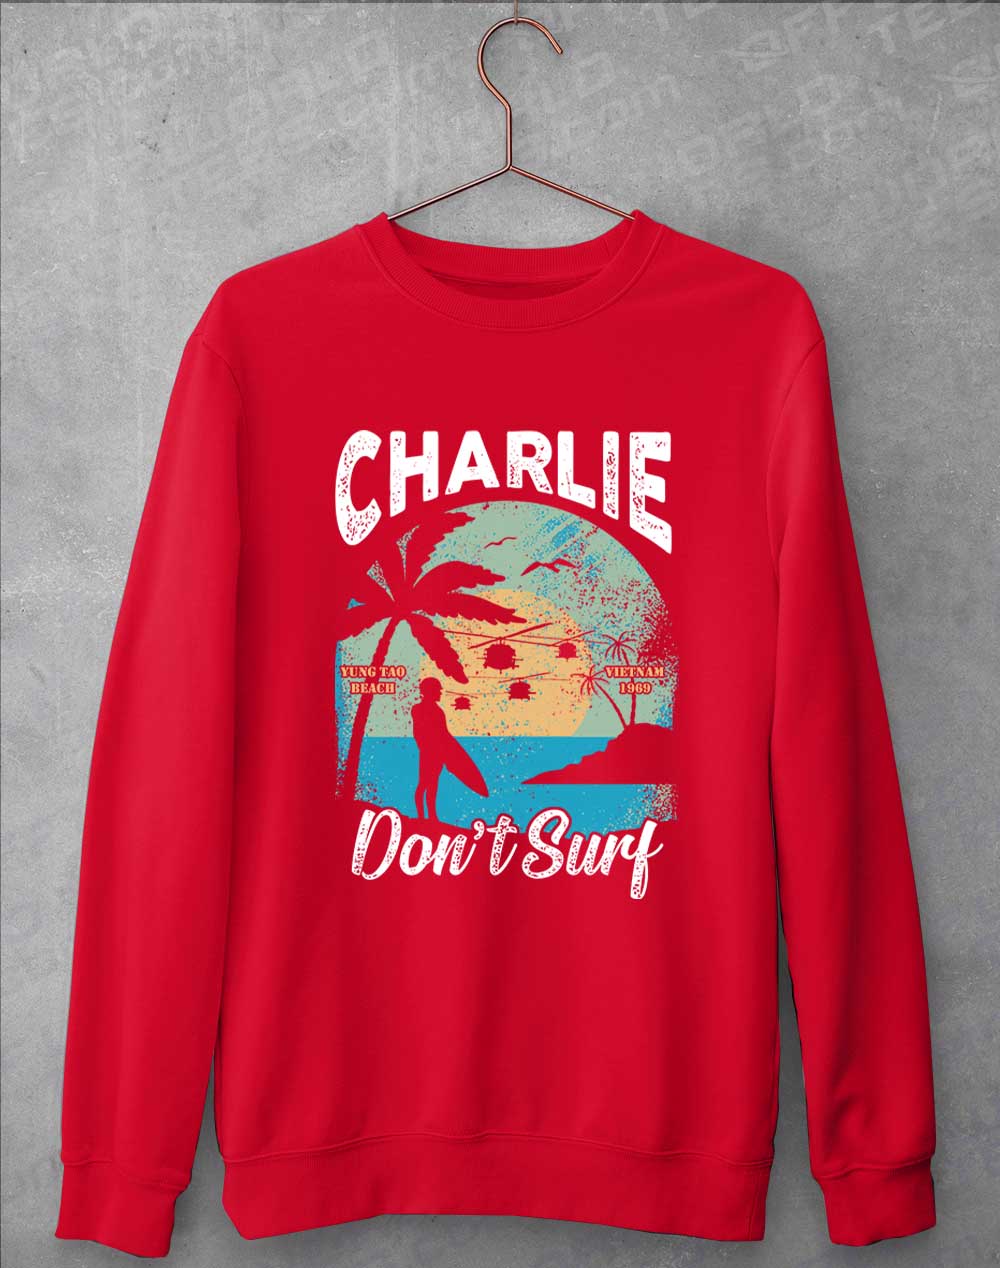 Fire Red - Charlie Don't Surf Sweatshirt